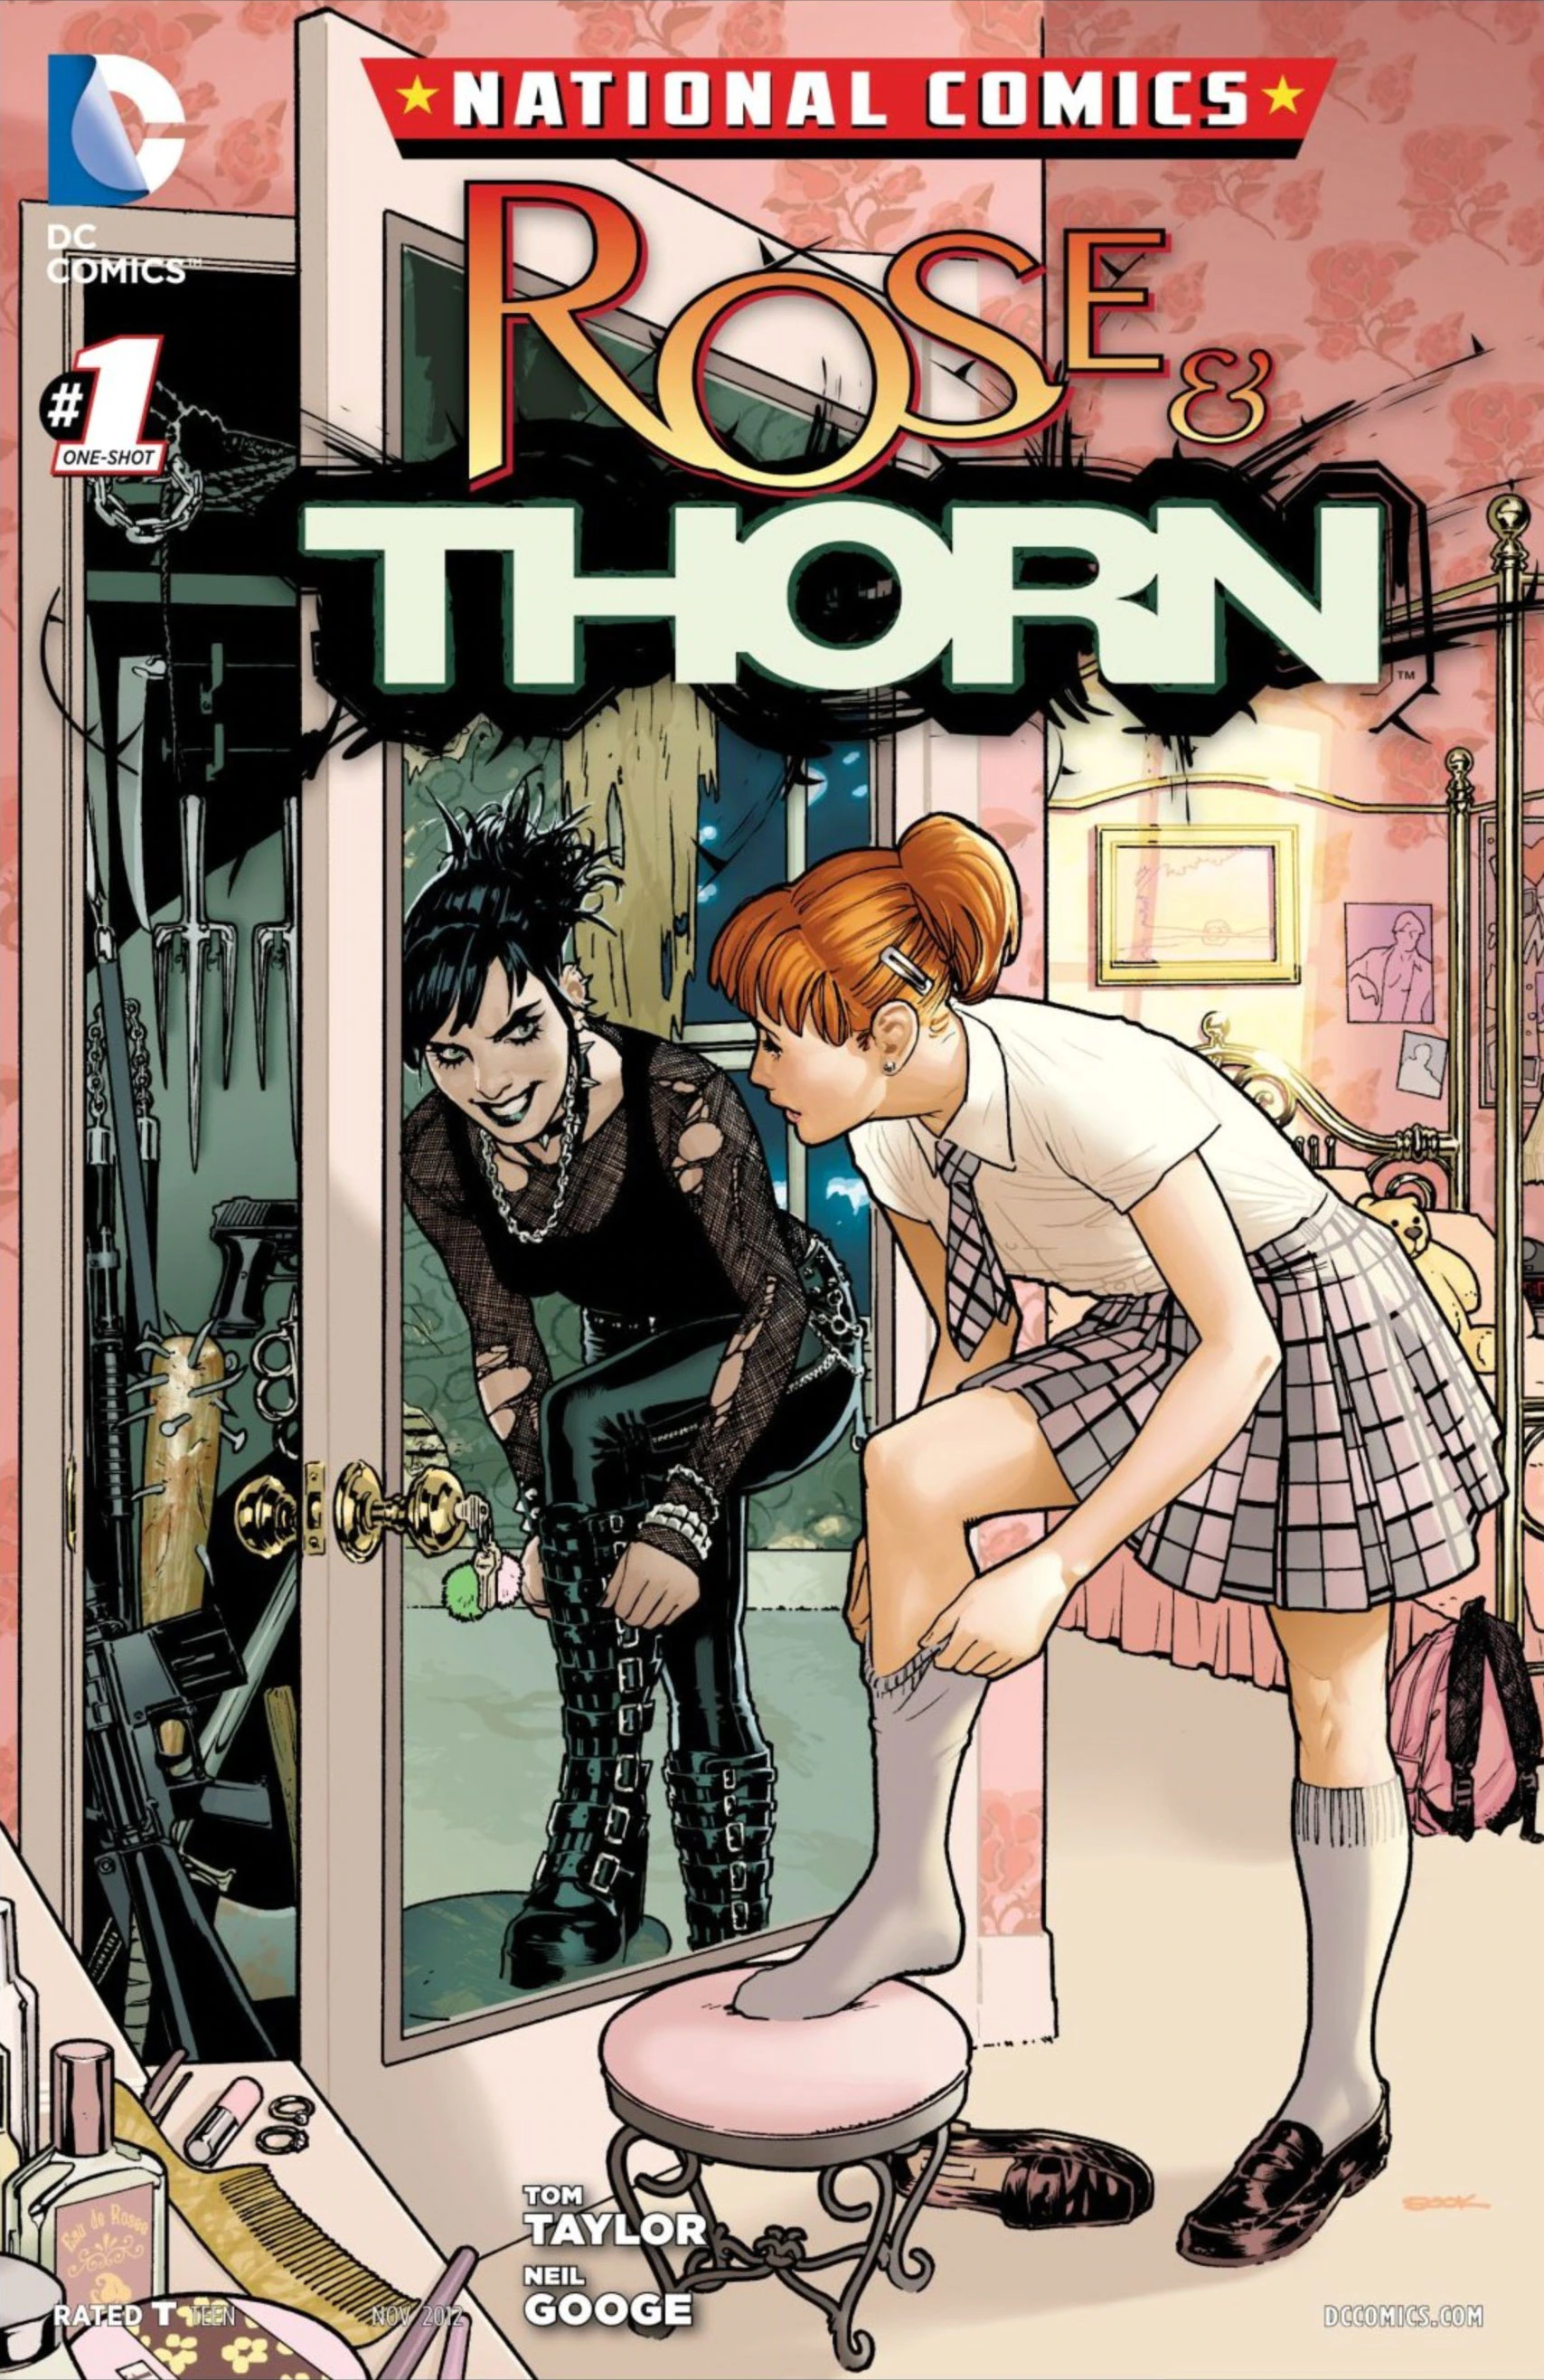 National Comics Rose & Thorn